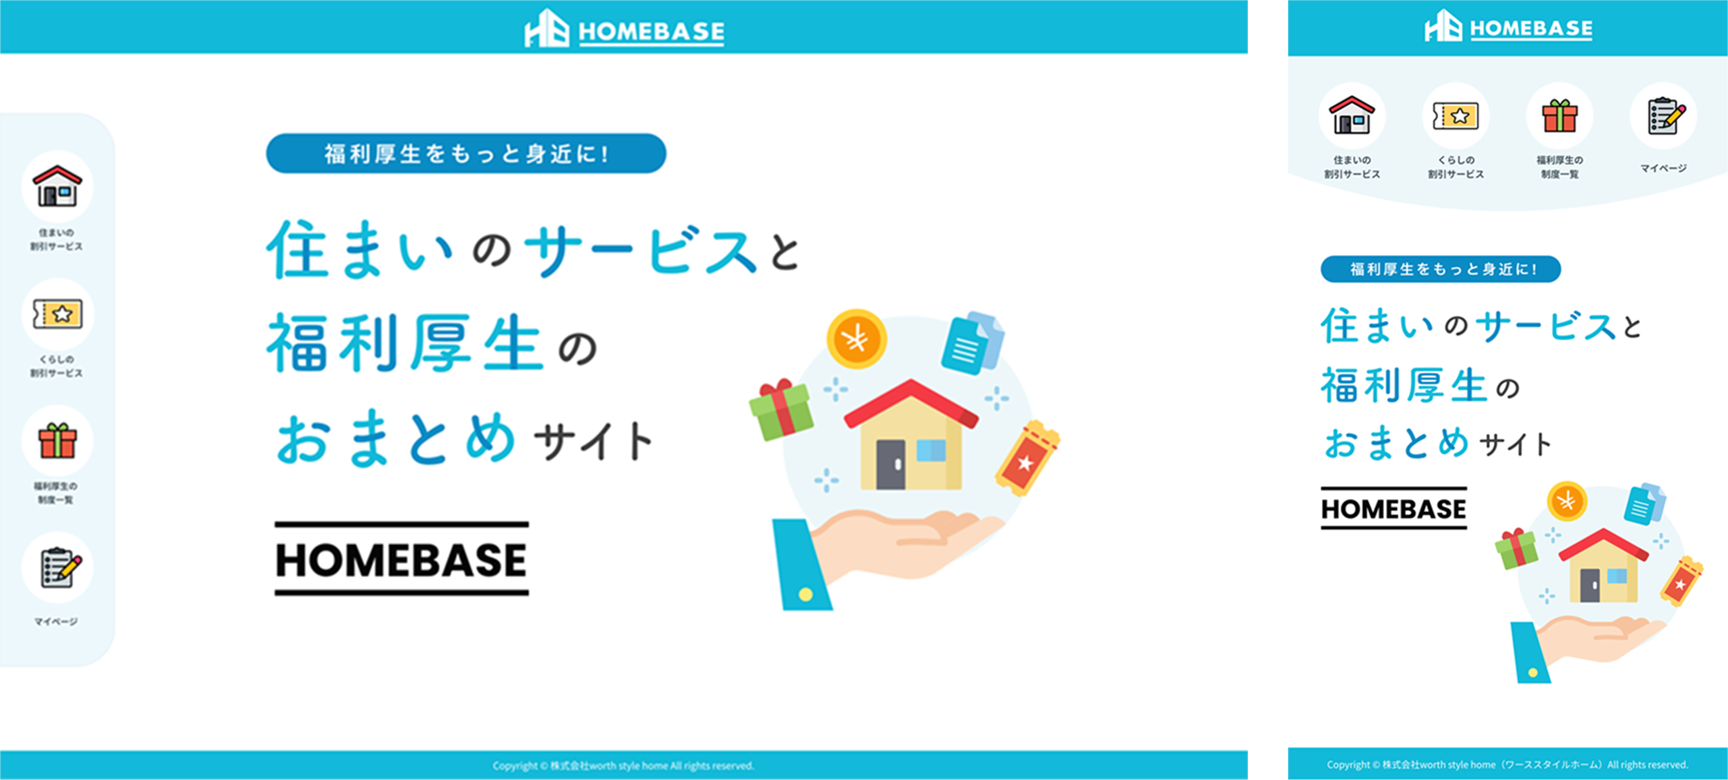 homebase_top.png